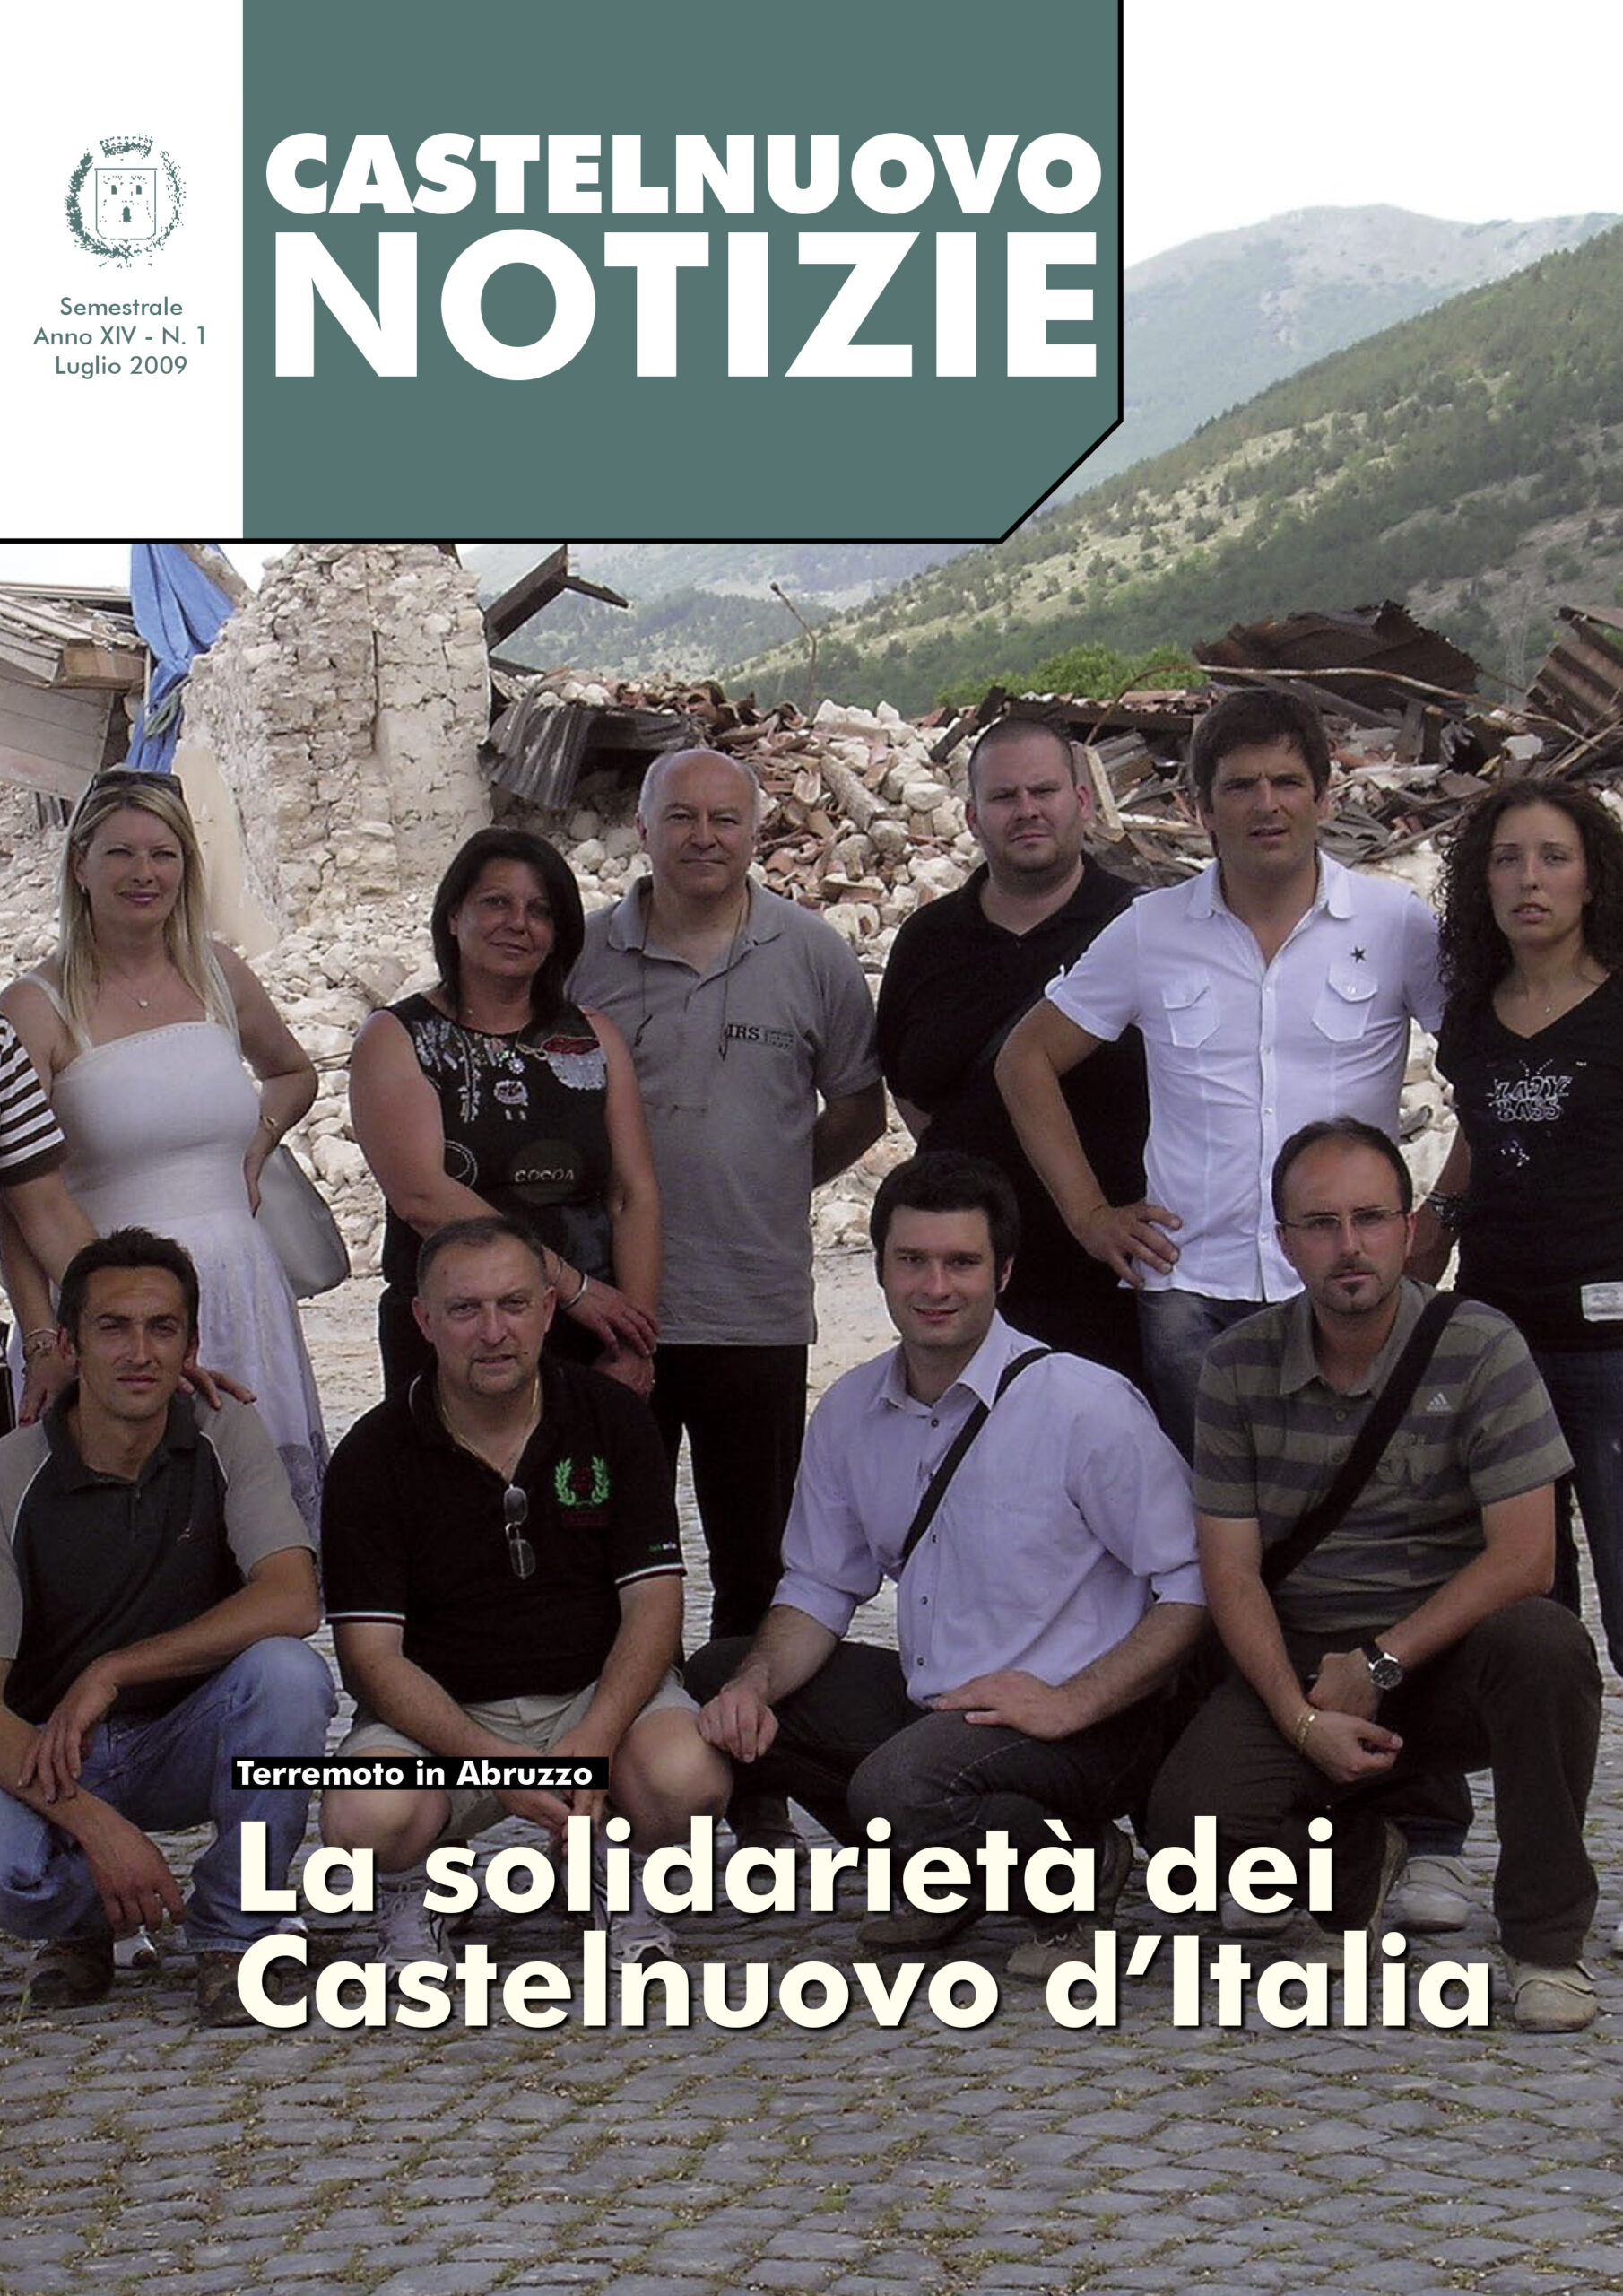 Castelnuovo Notizie 1/2009